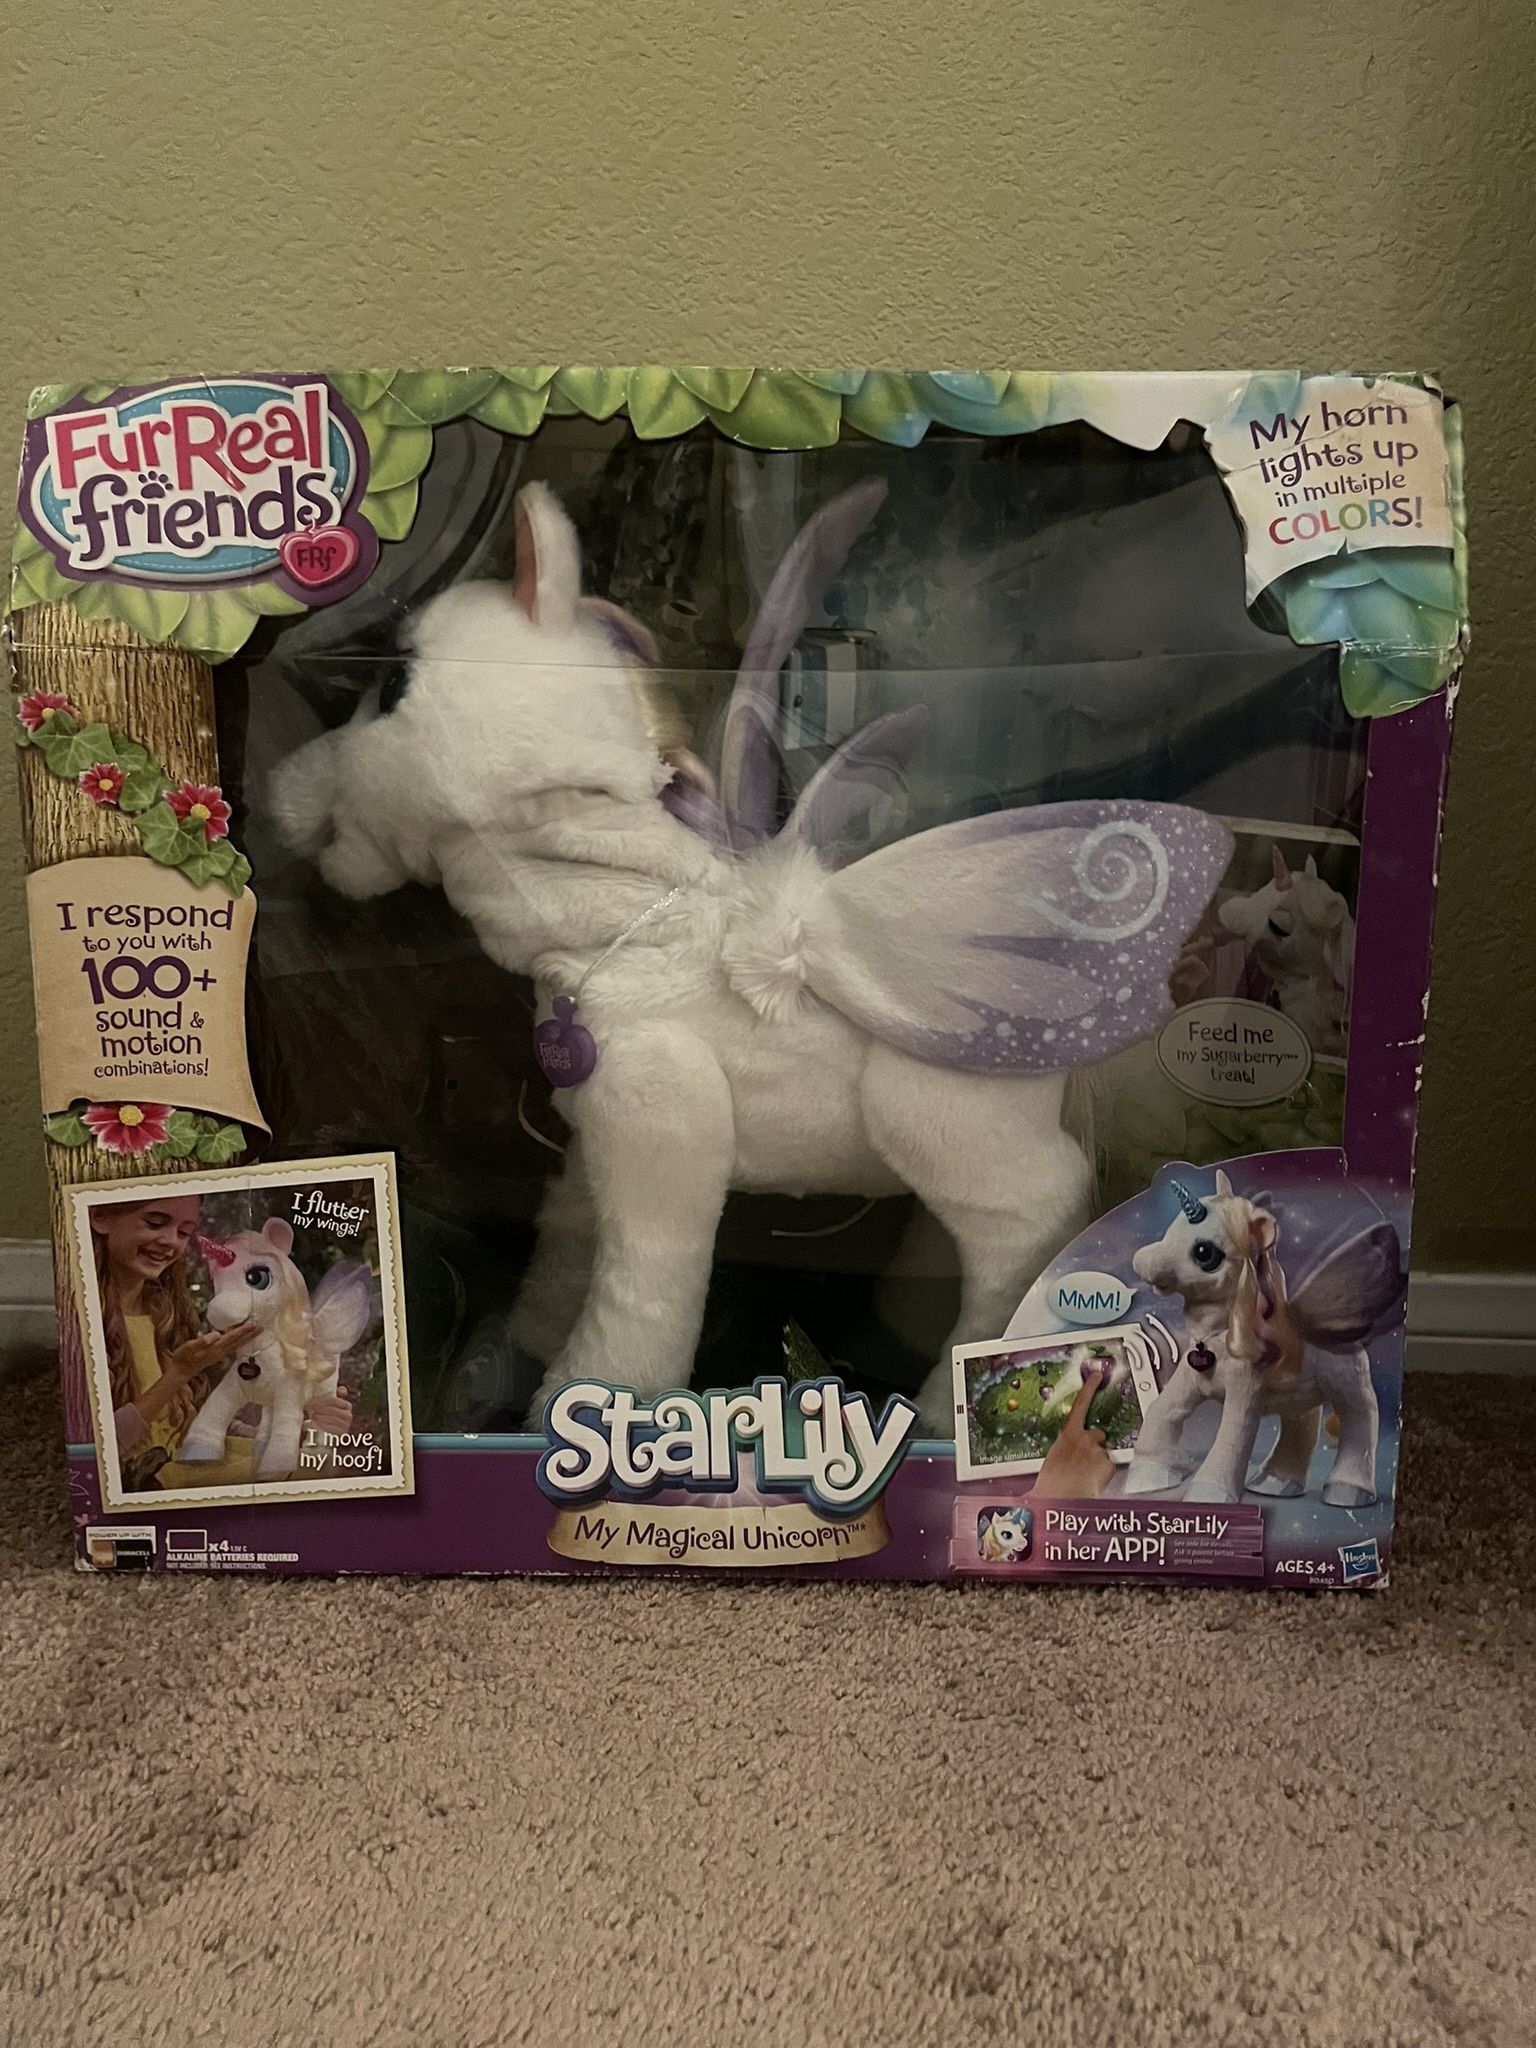 FurReal Friends Starlily My Magical Unicorn Interactive Stuffed Animal